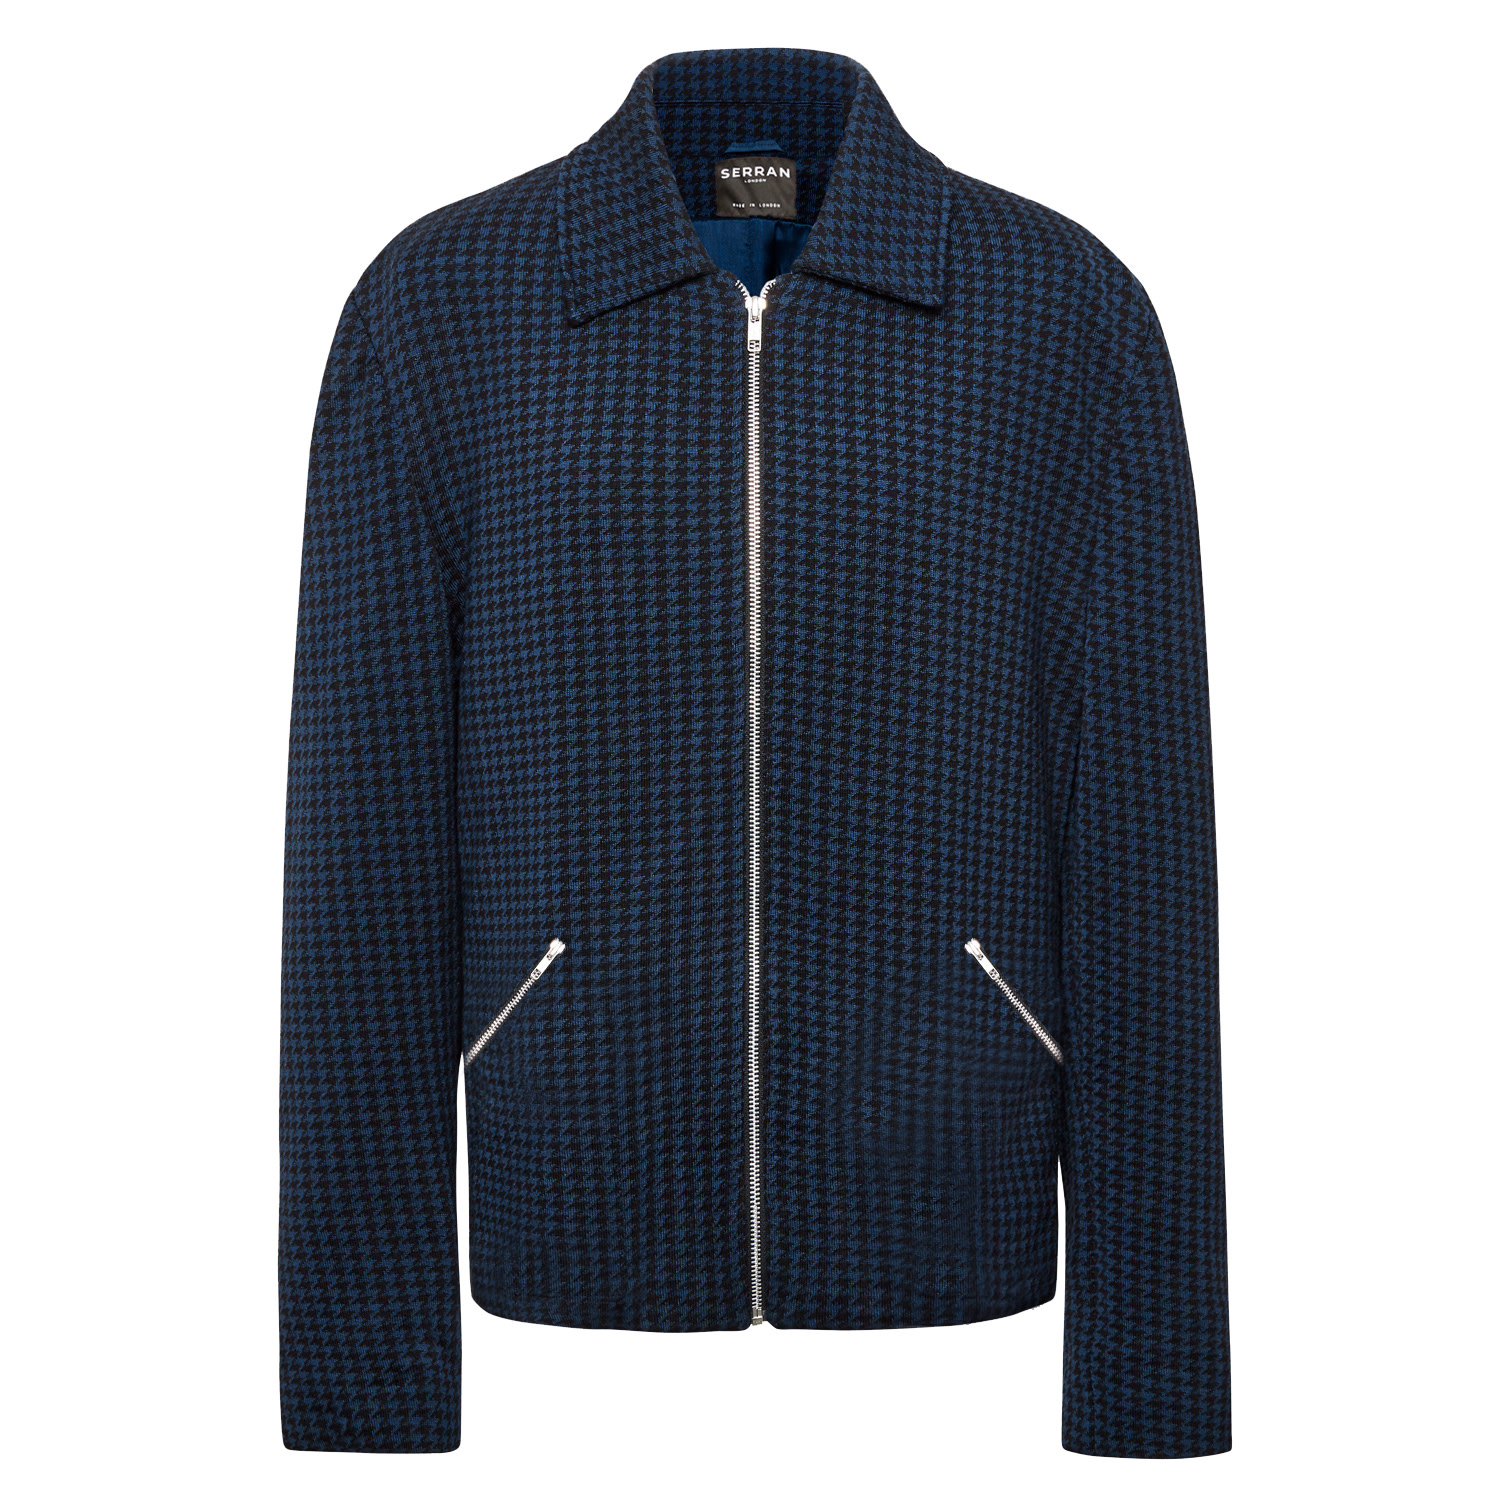 Men’s Blue / Black Houndstooth Knitted Jacket - Navy & Black Extra Large Serran London